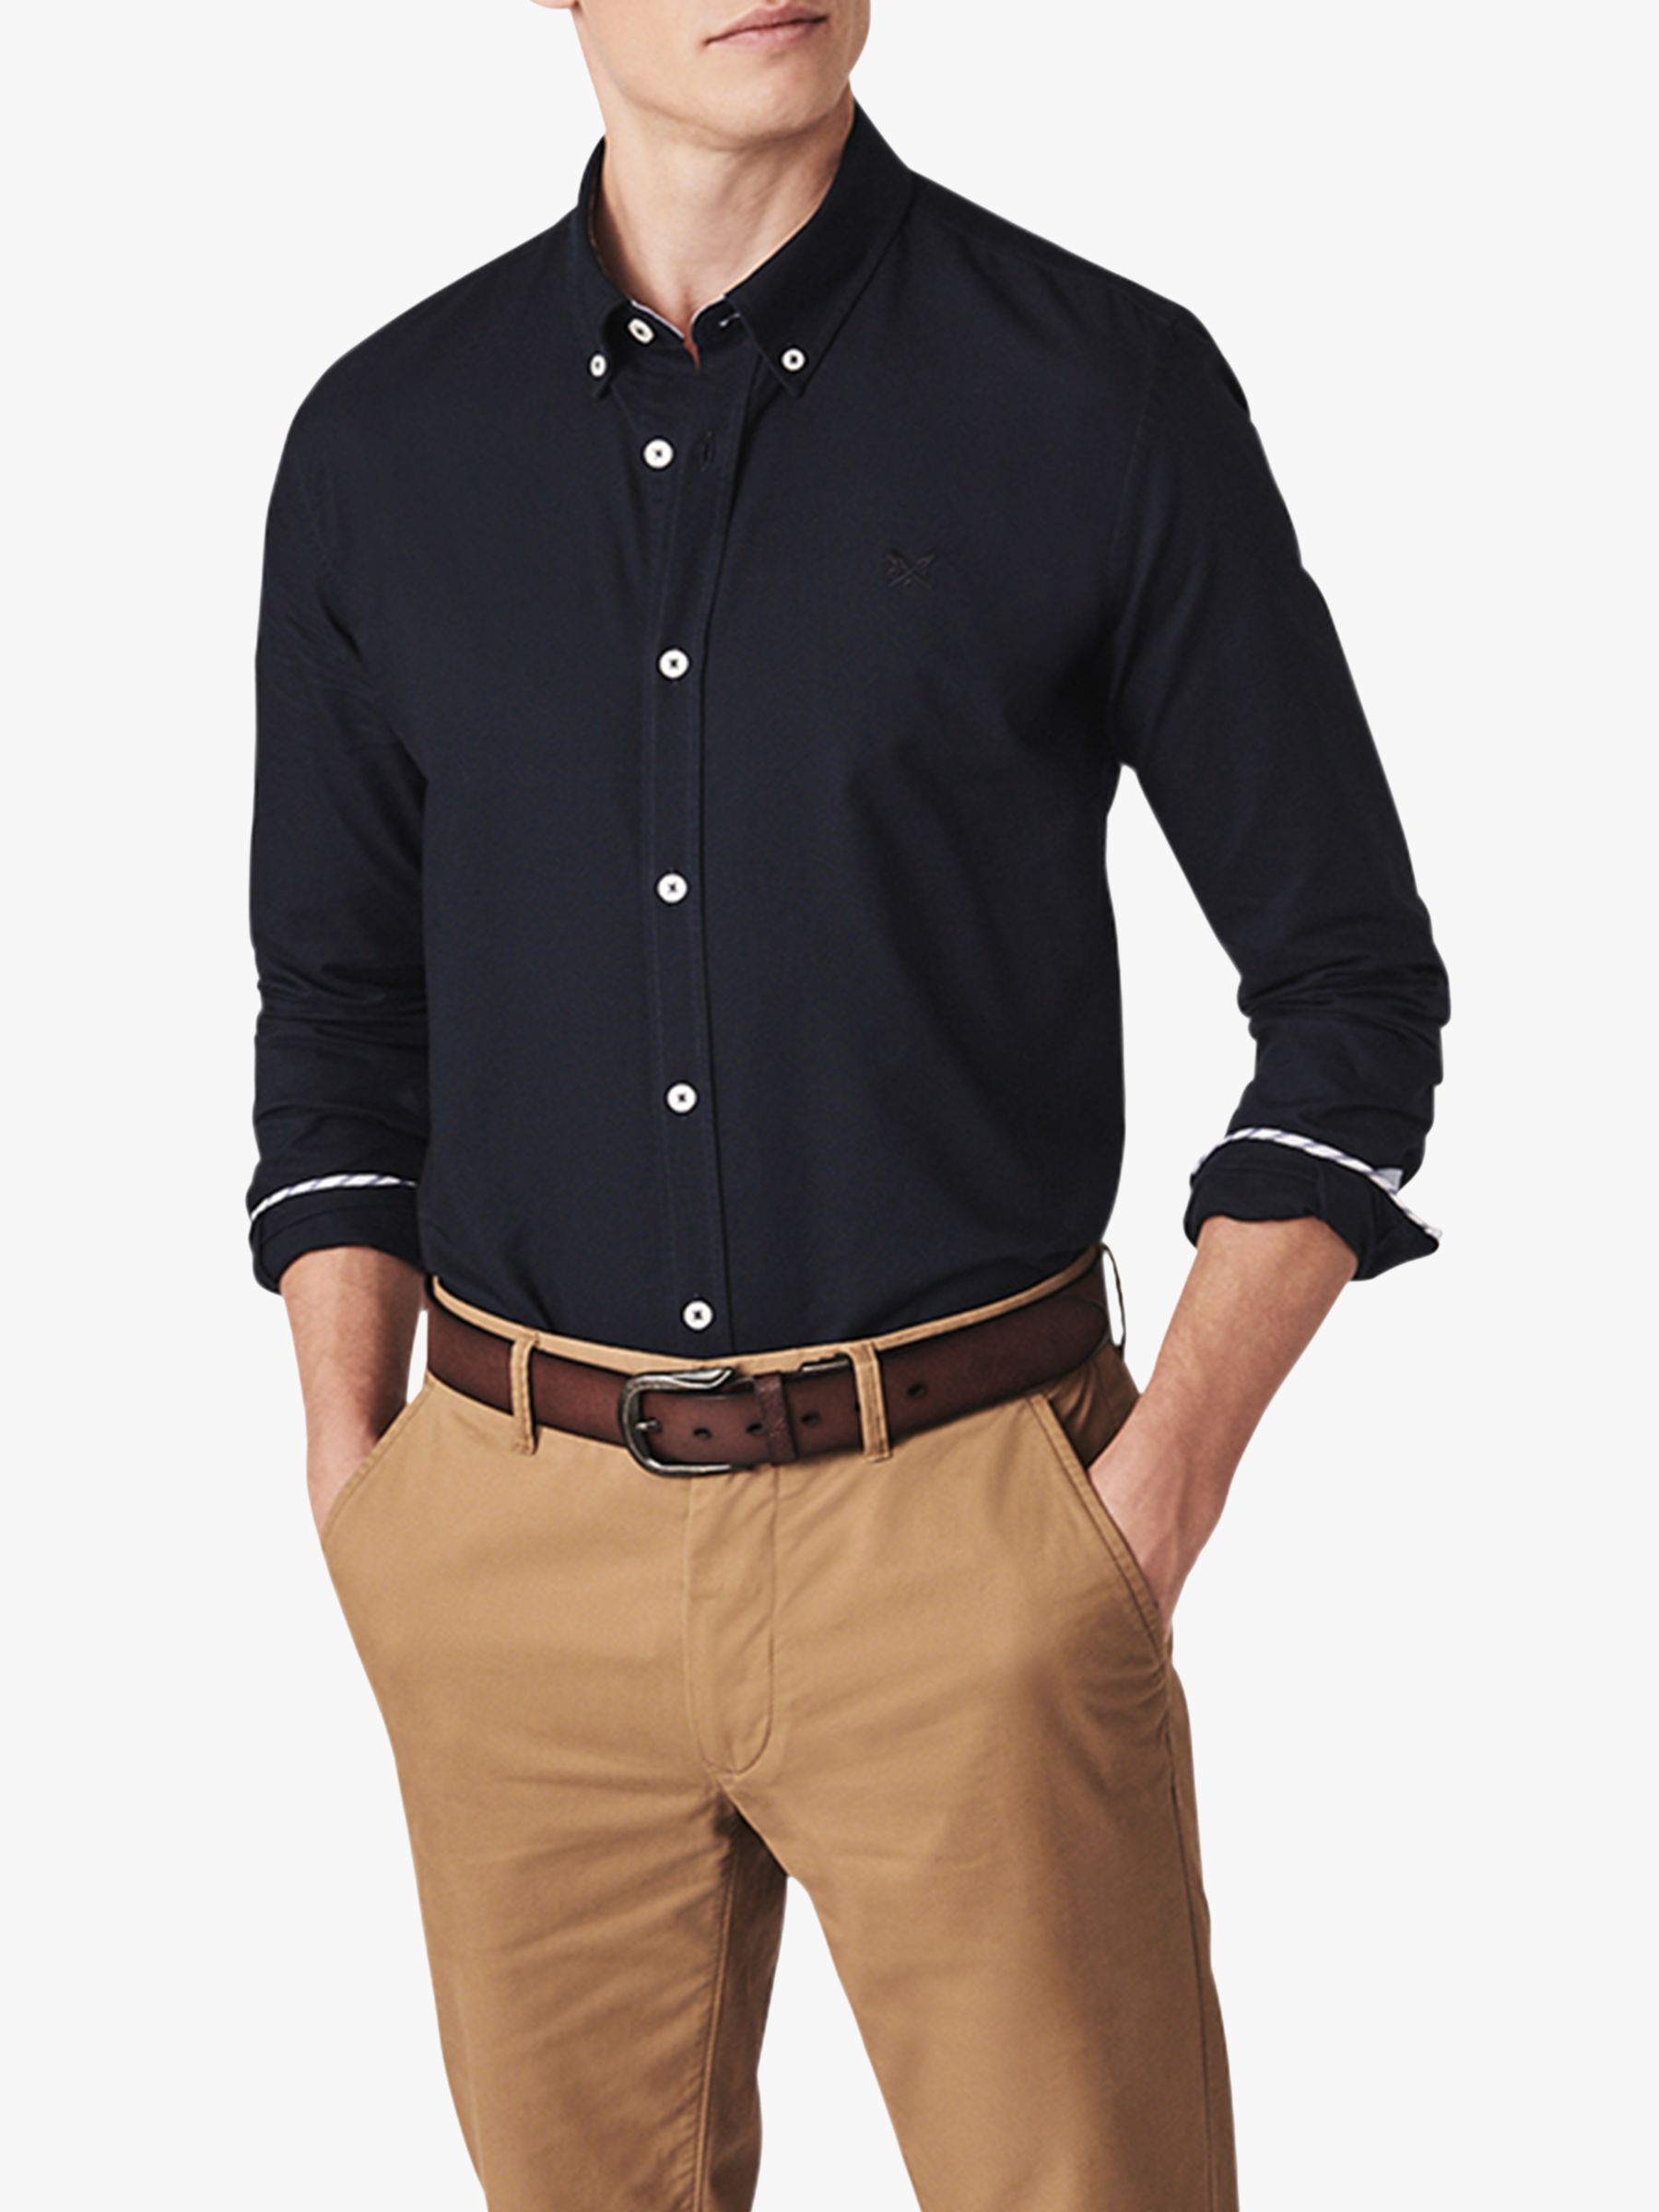 Crew Clothing Slim Fit Long Sleeve Oxford Shirt, Navy, XS